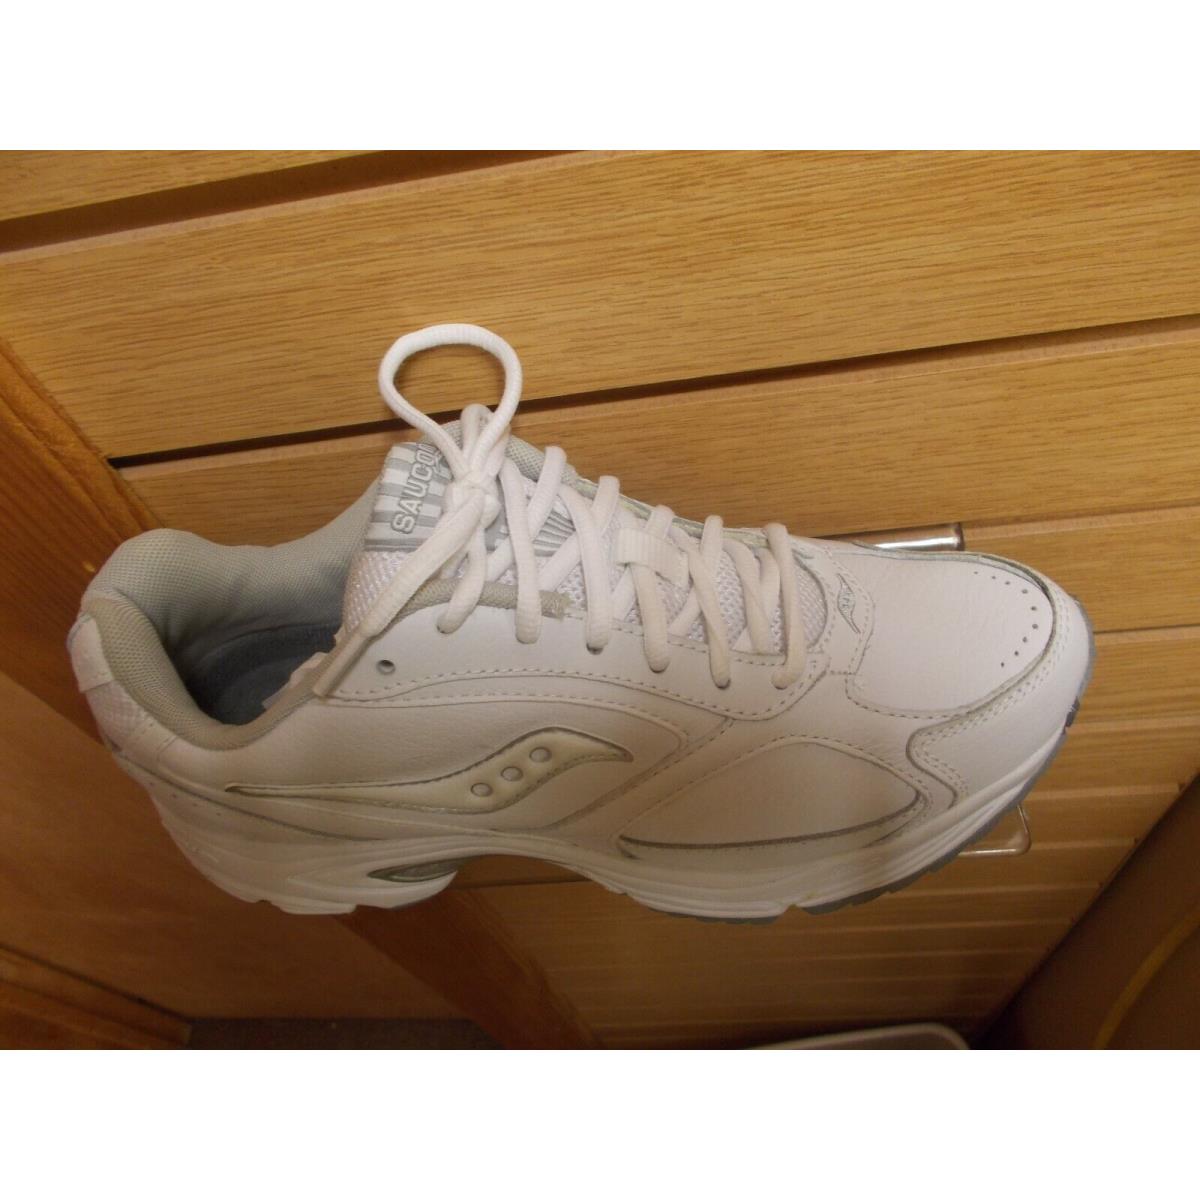 Saucony shoes OMNI - White 2